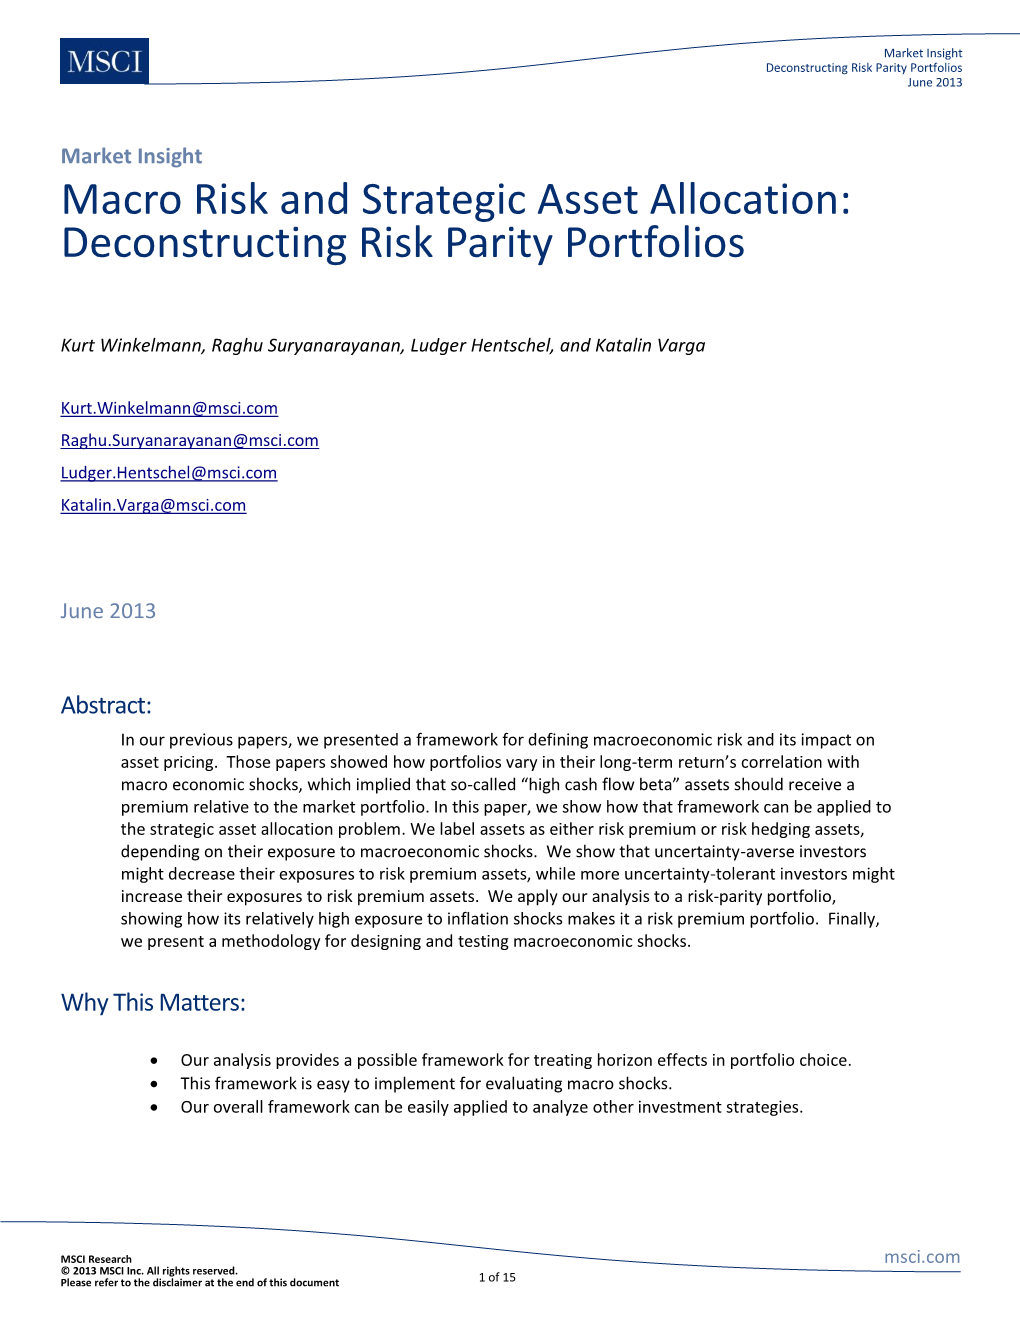 Macro Risk and Strategic Asset Allocation: Deconstructing Risk Parity Portfolios